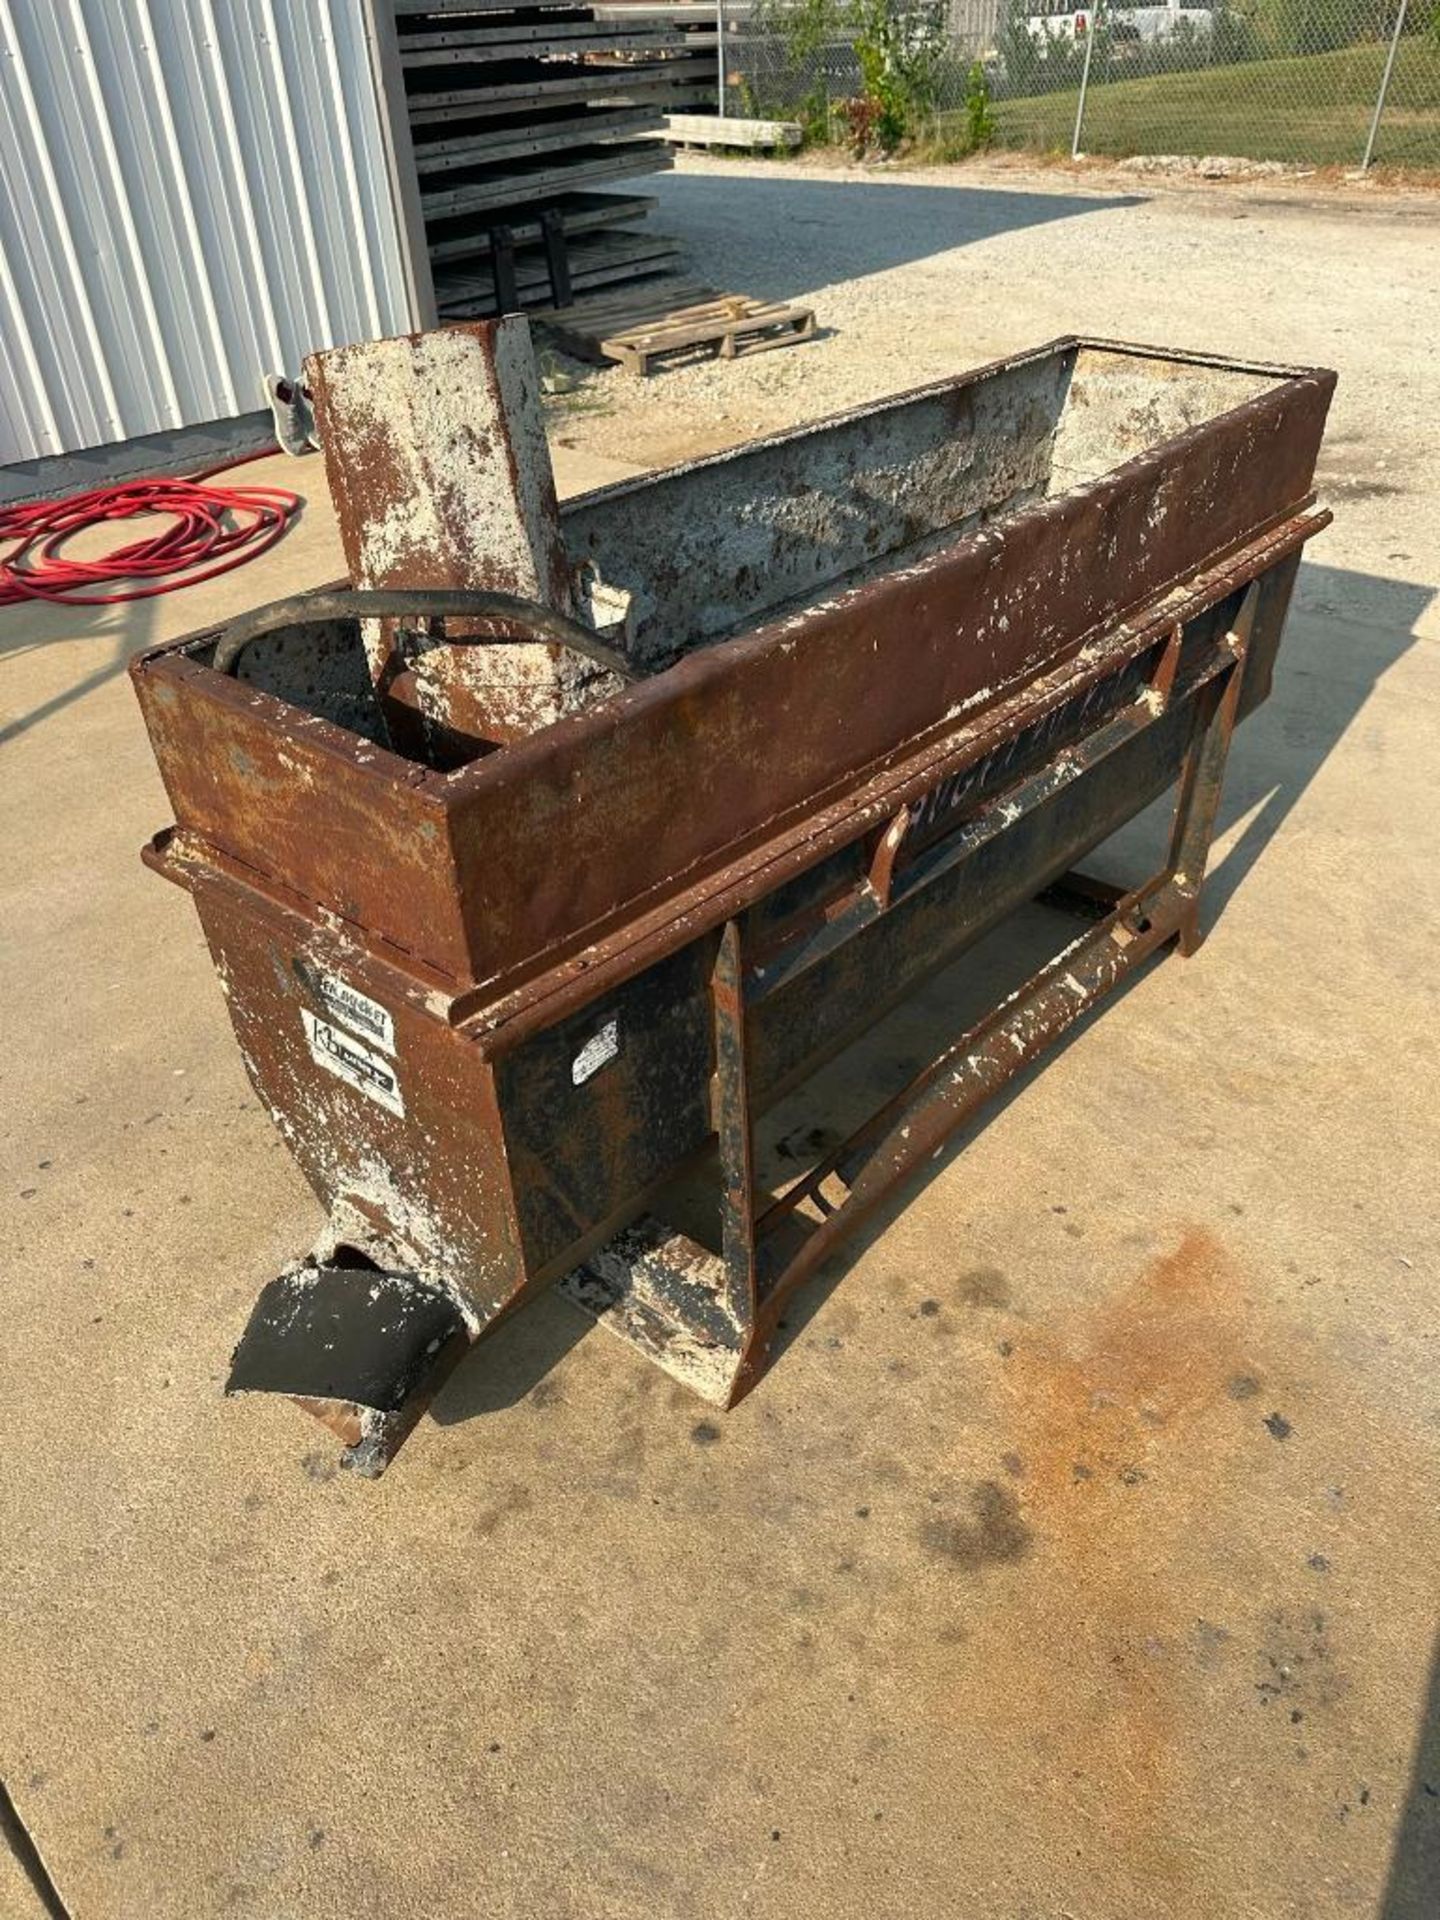 concrete mixer skid steer attachment, located in Mt. Pleasant, IA. - Image 3 of 7